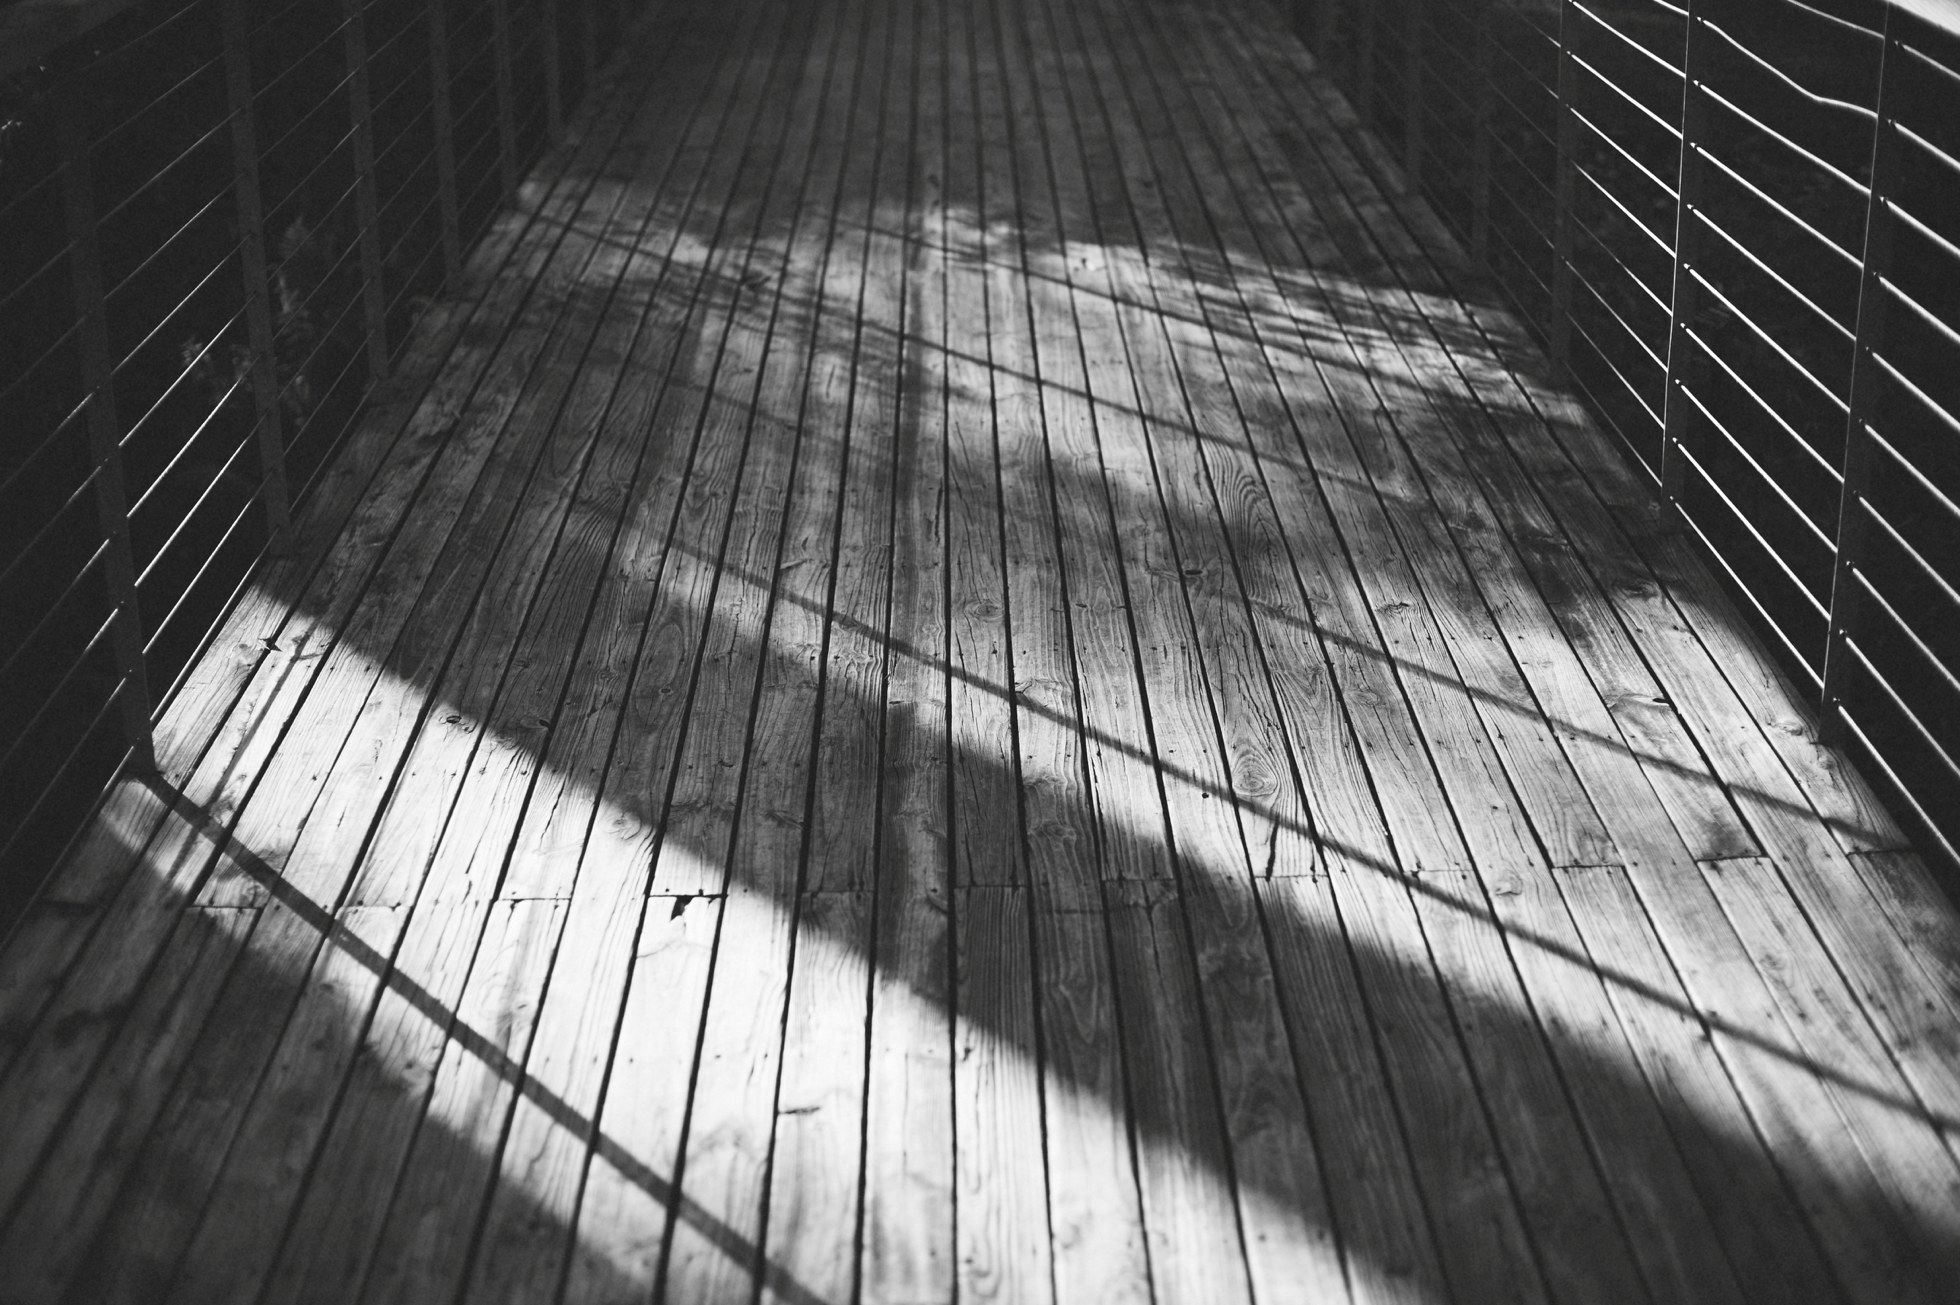 shadows across wooden deck